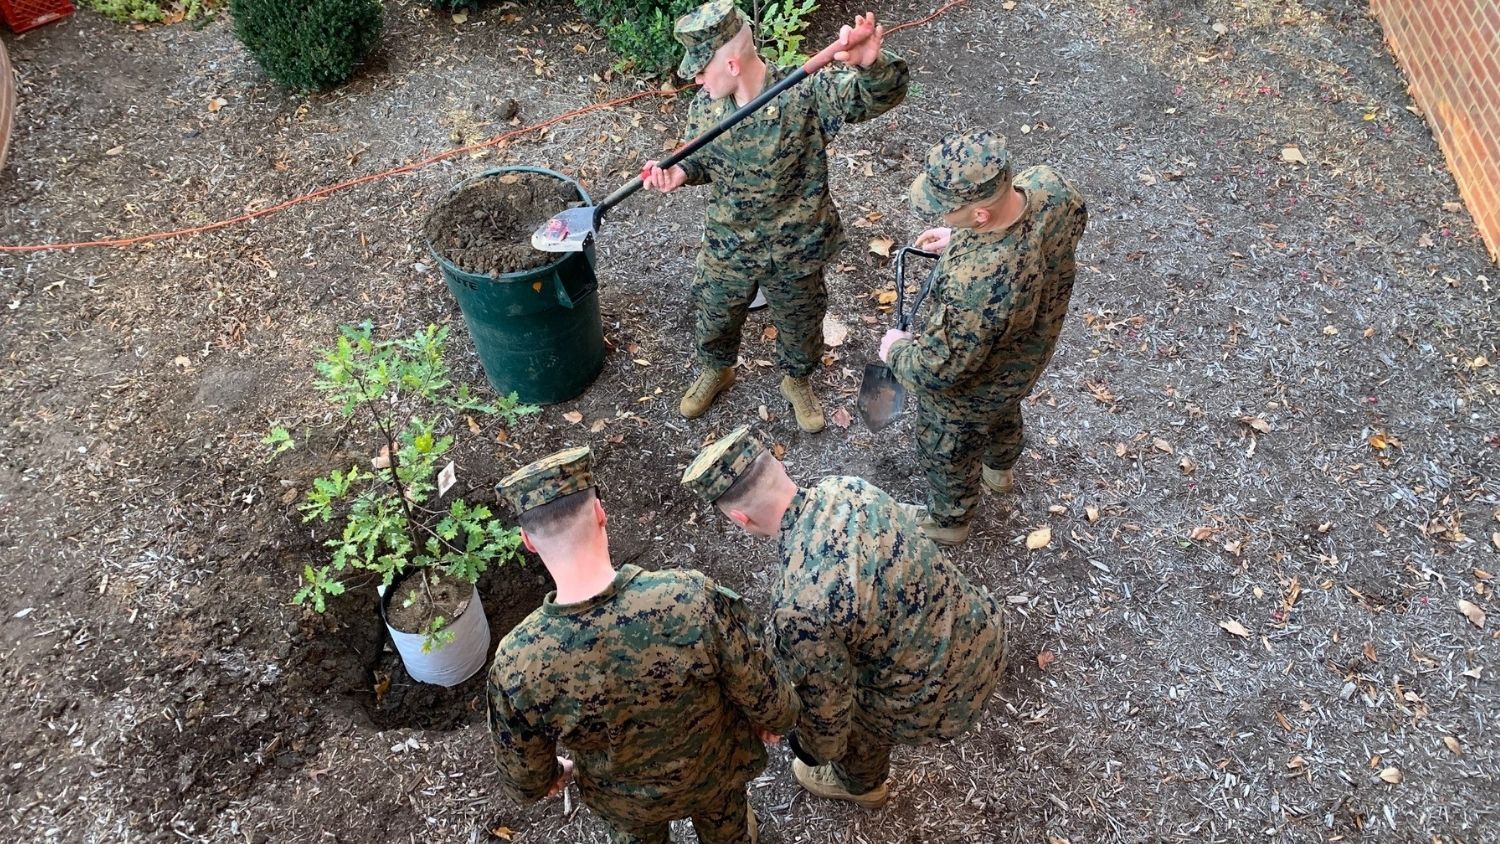 The NC State Marine Corps Naval ROTC planted oak saplings.